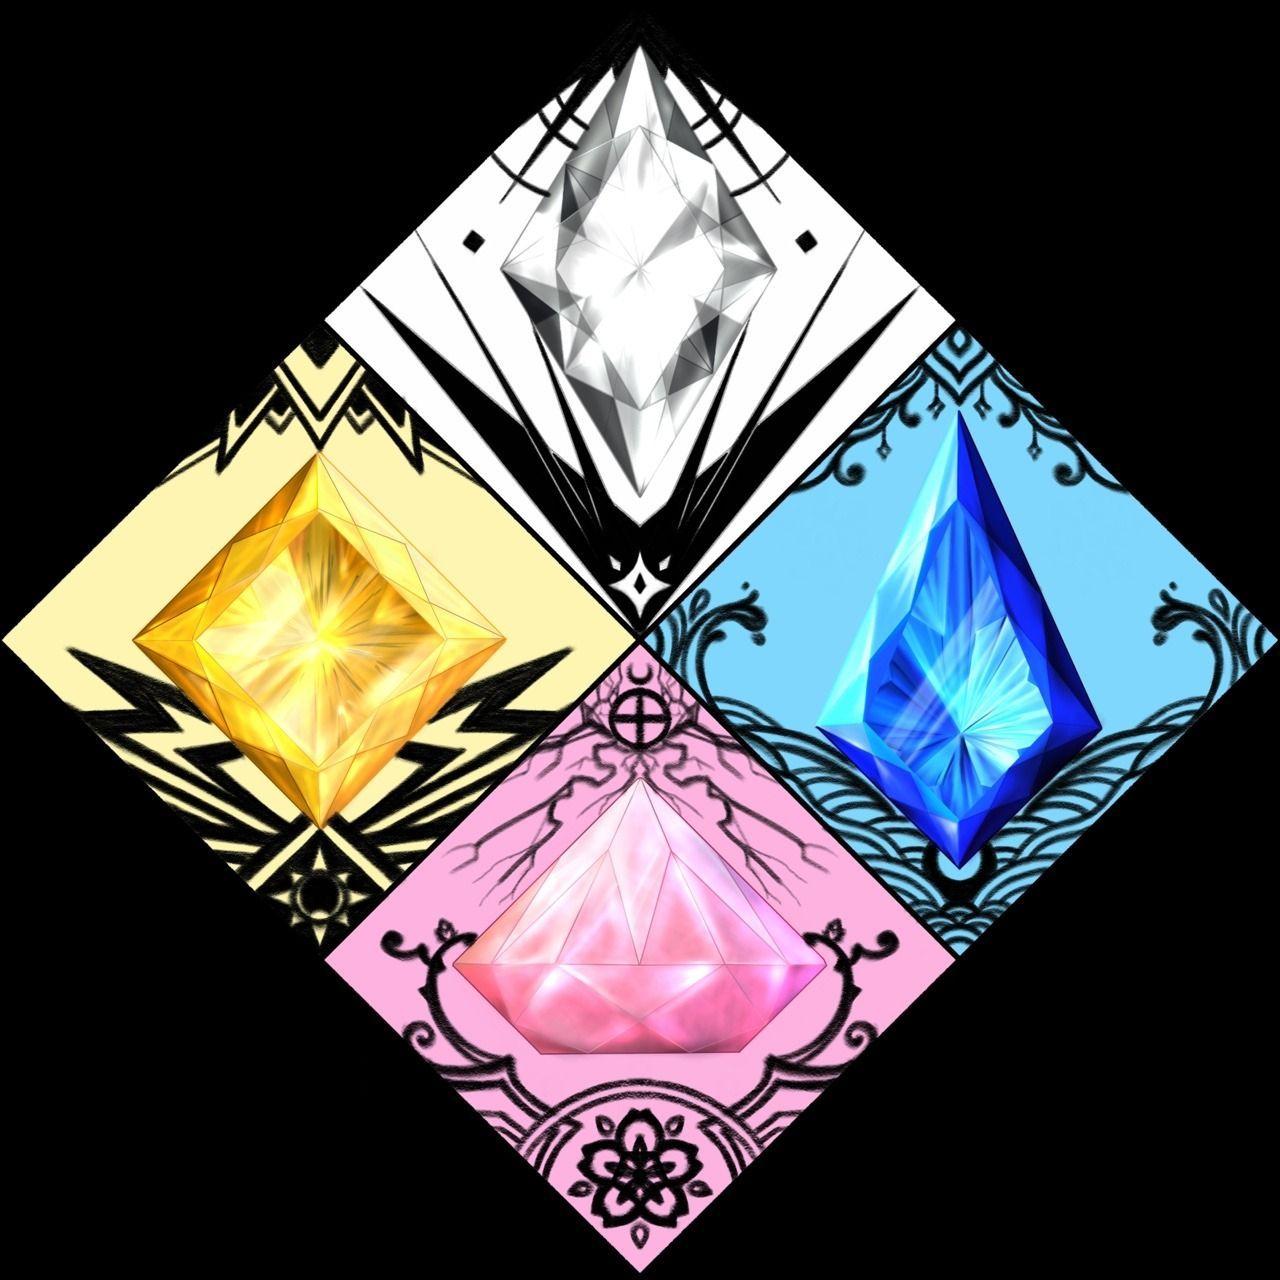 Steven Universe Diamonds Logo - The Diamond Authority emblem | Infinity | Pinterest | Diamond ...